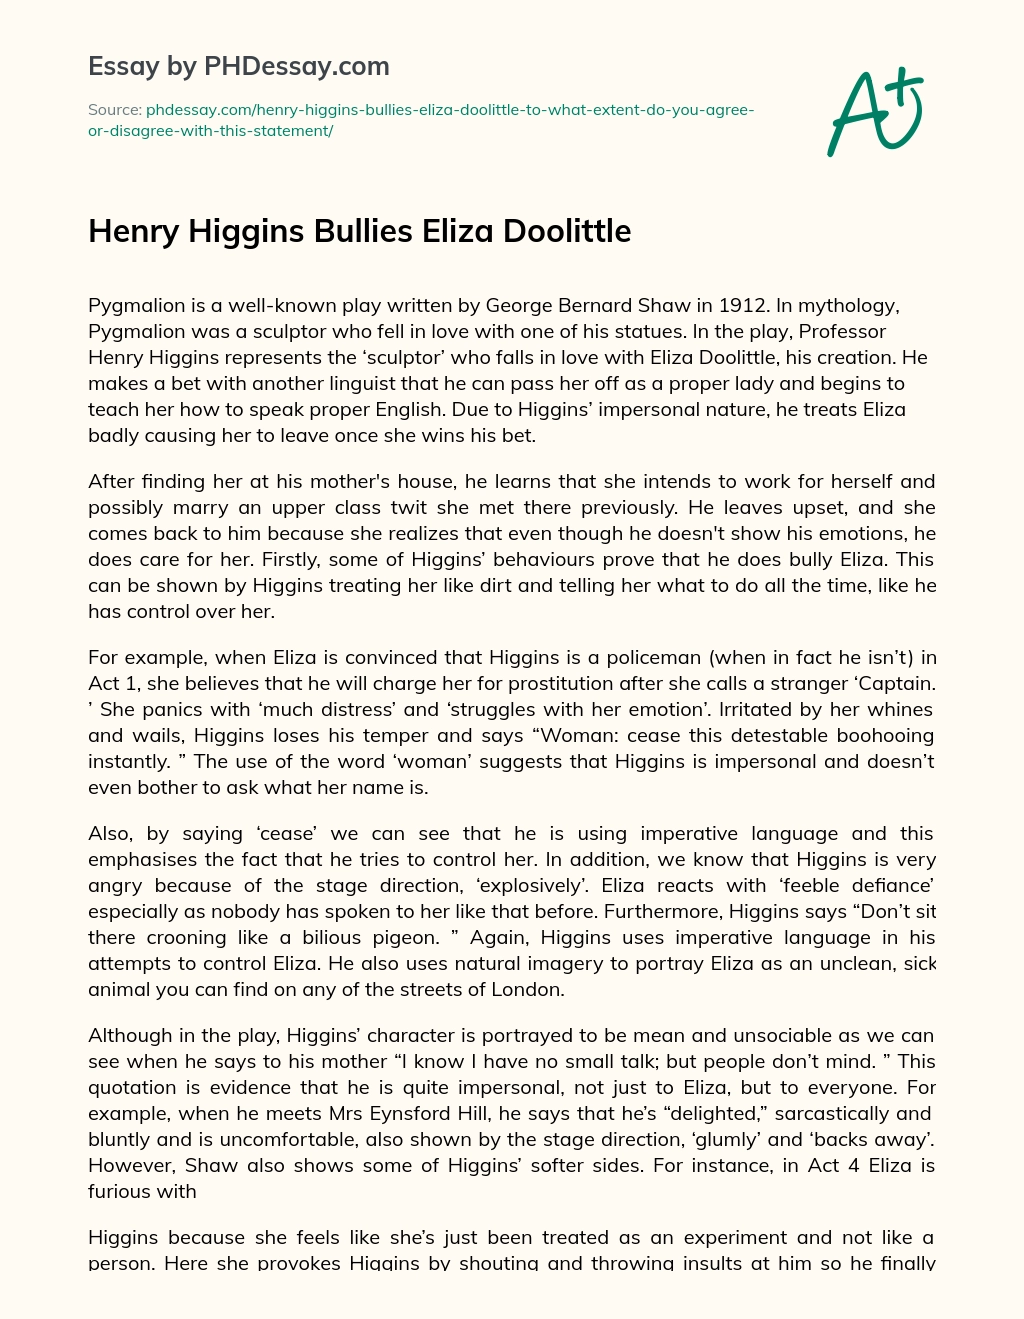 Henry Higgins Bullies Eliza Doolittle essay